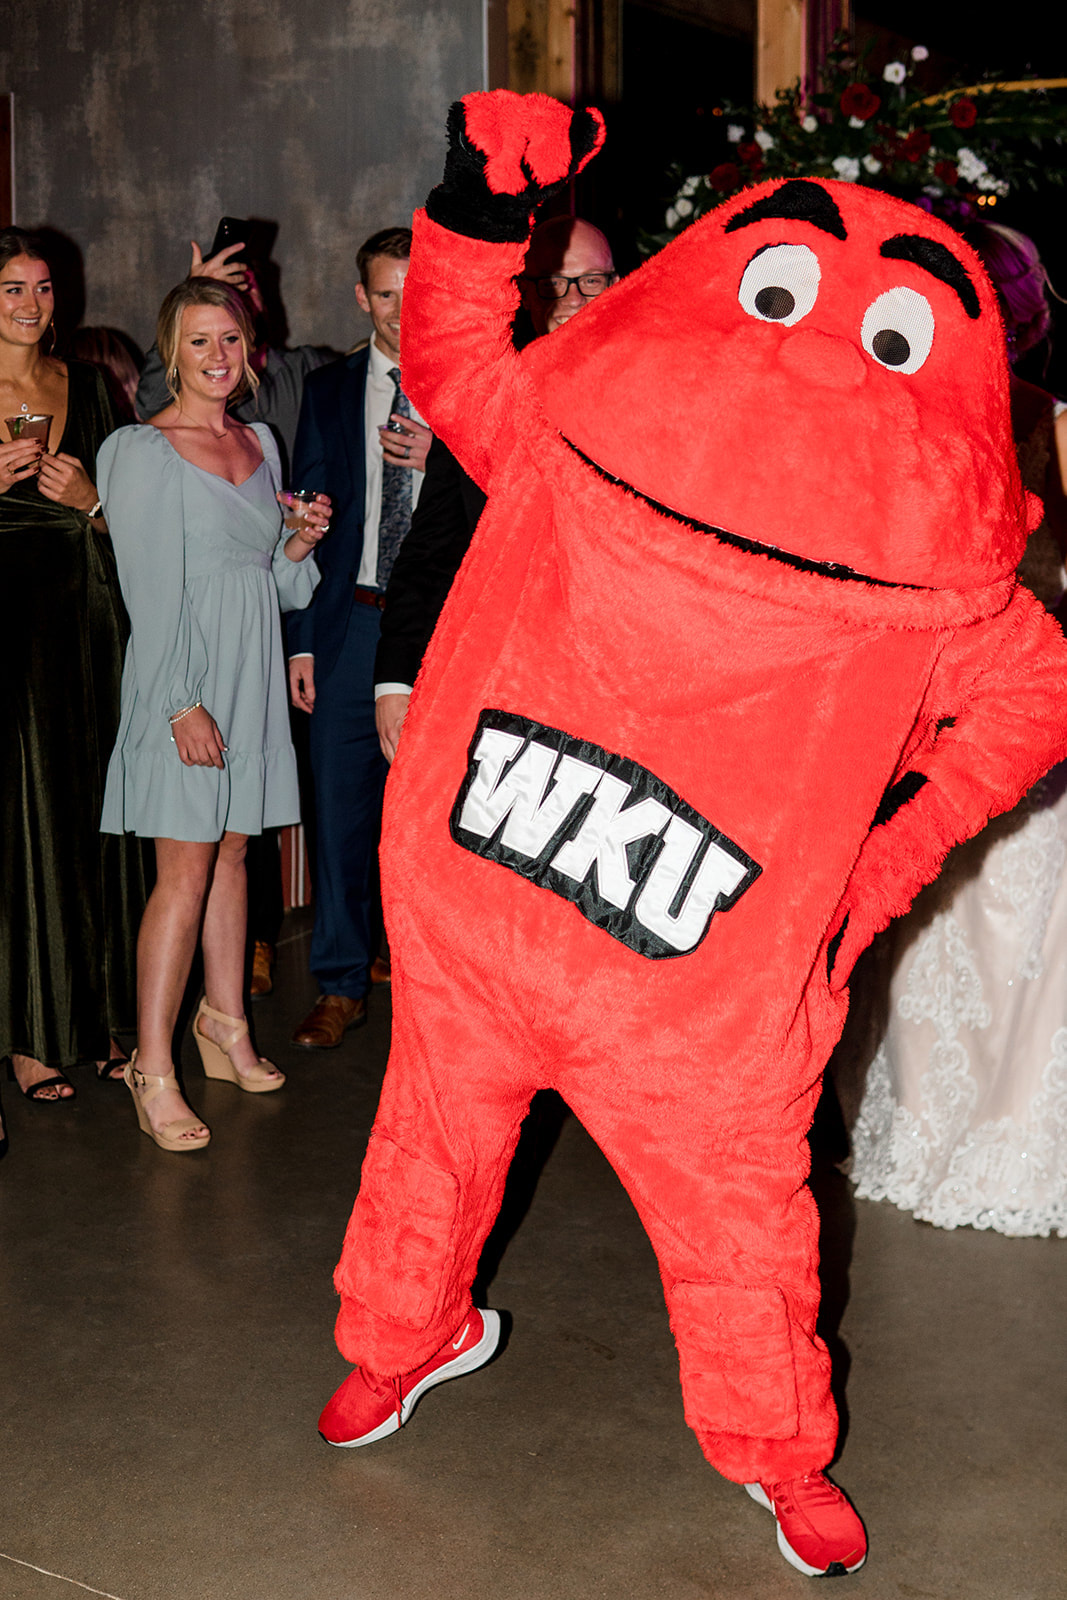 Big Red WKU at Wedding in Nashville